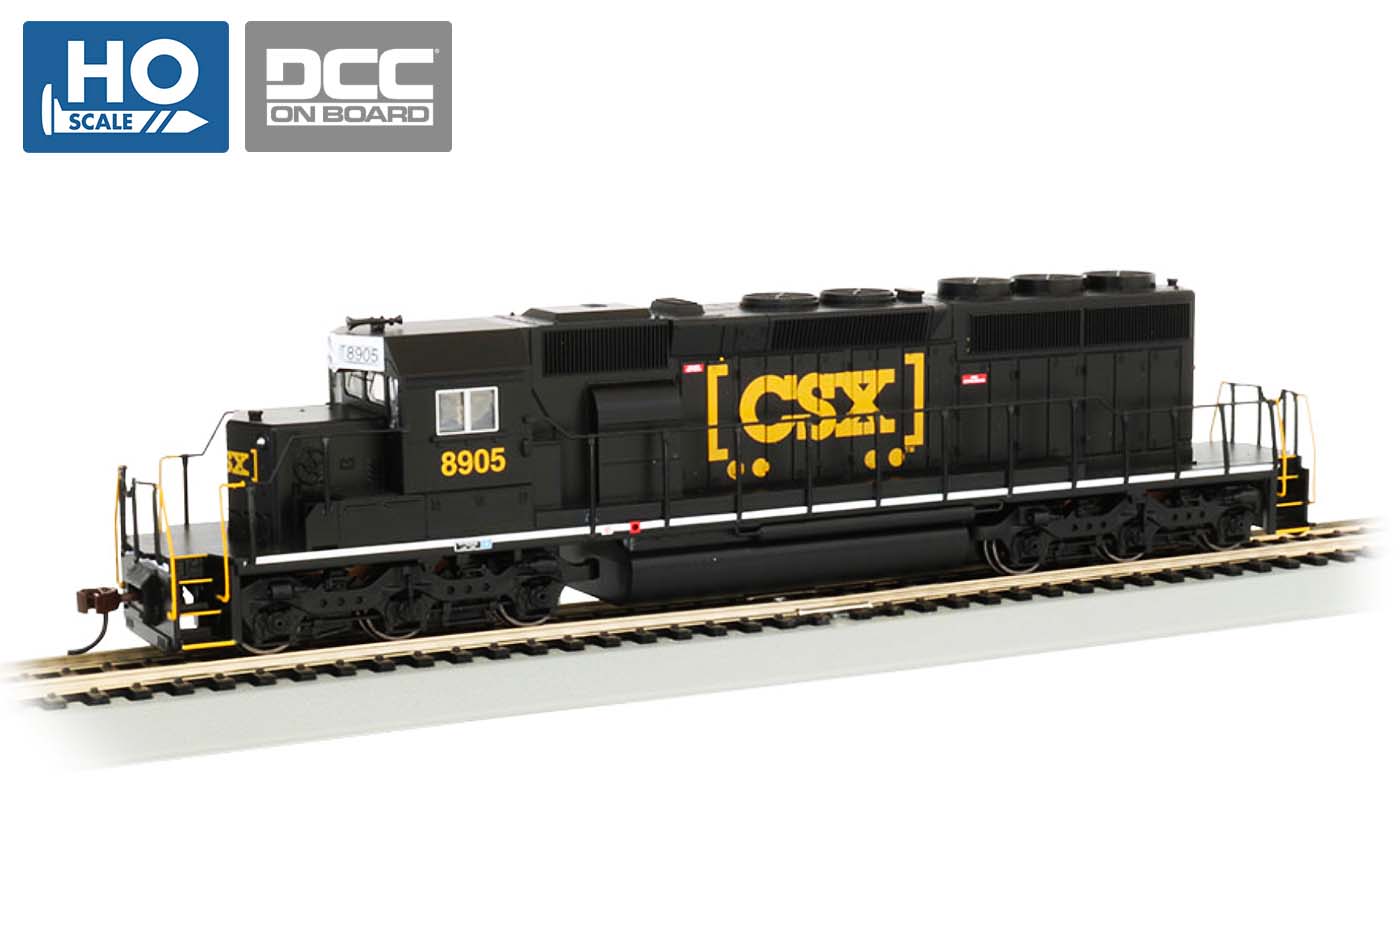 Micro-Trains MTL Z-Scale EMD SD40-2 Locomotive CSX Transportation Boxcar #8250